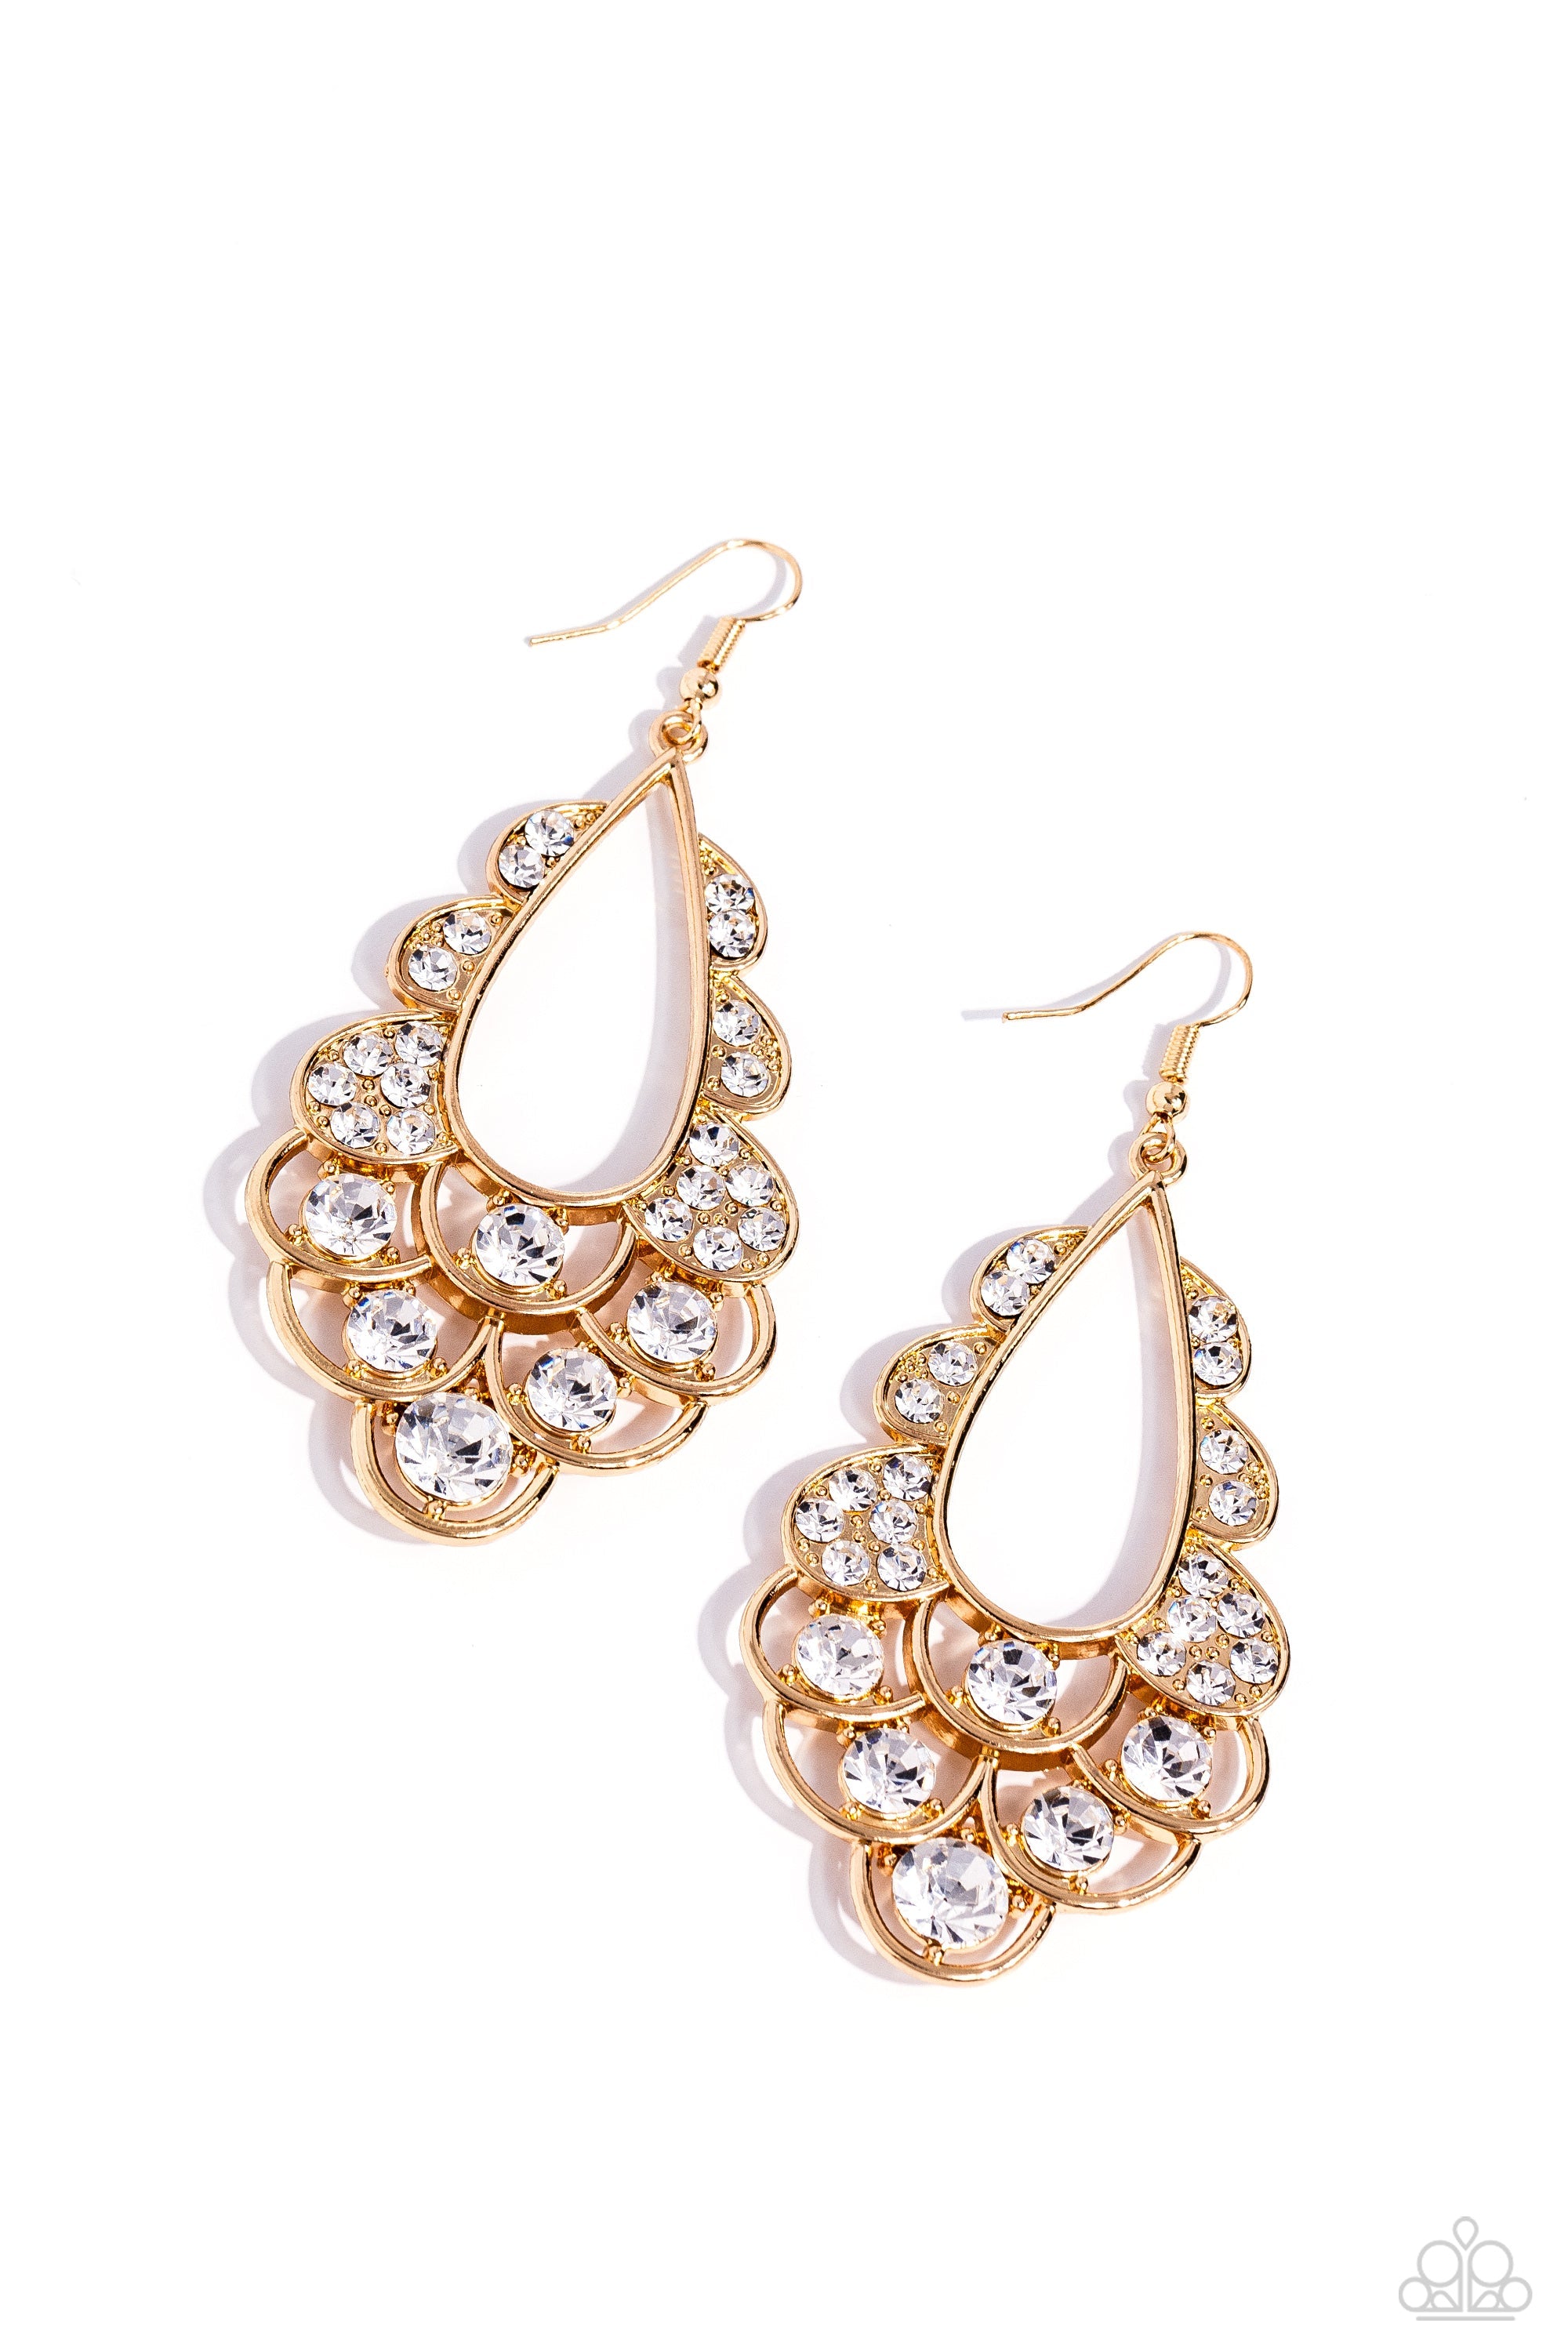 Majestic Masquerade Gold & White Rhinestone Earrings - Paparazzi Accessories- lightbox - CarasShop.com - $5 Jewelry by Cara Jewels